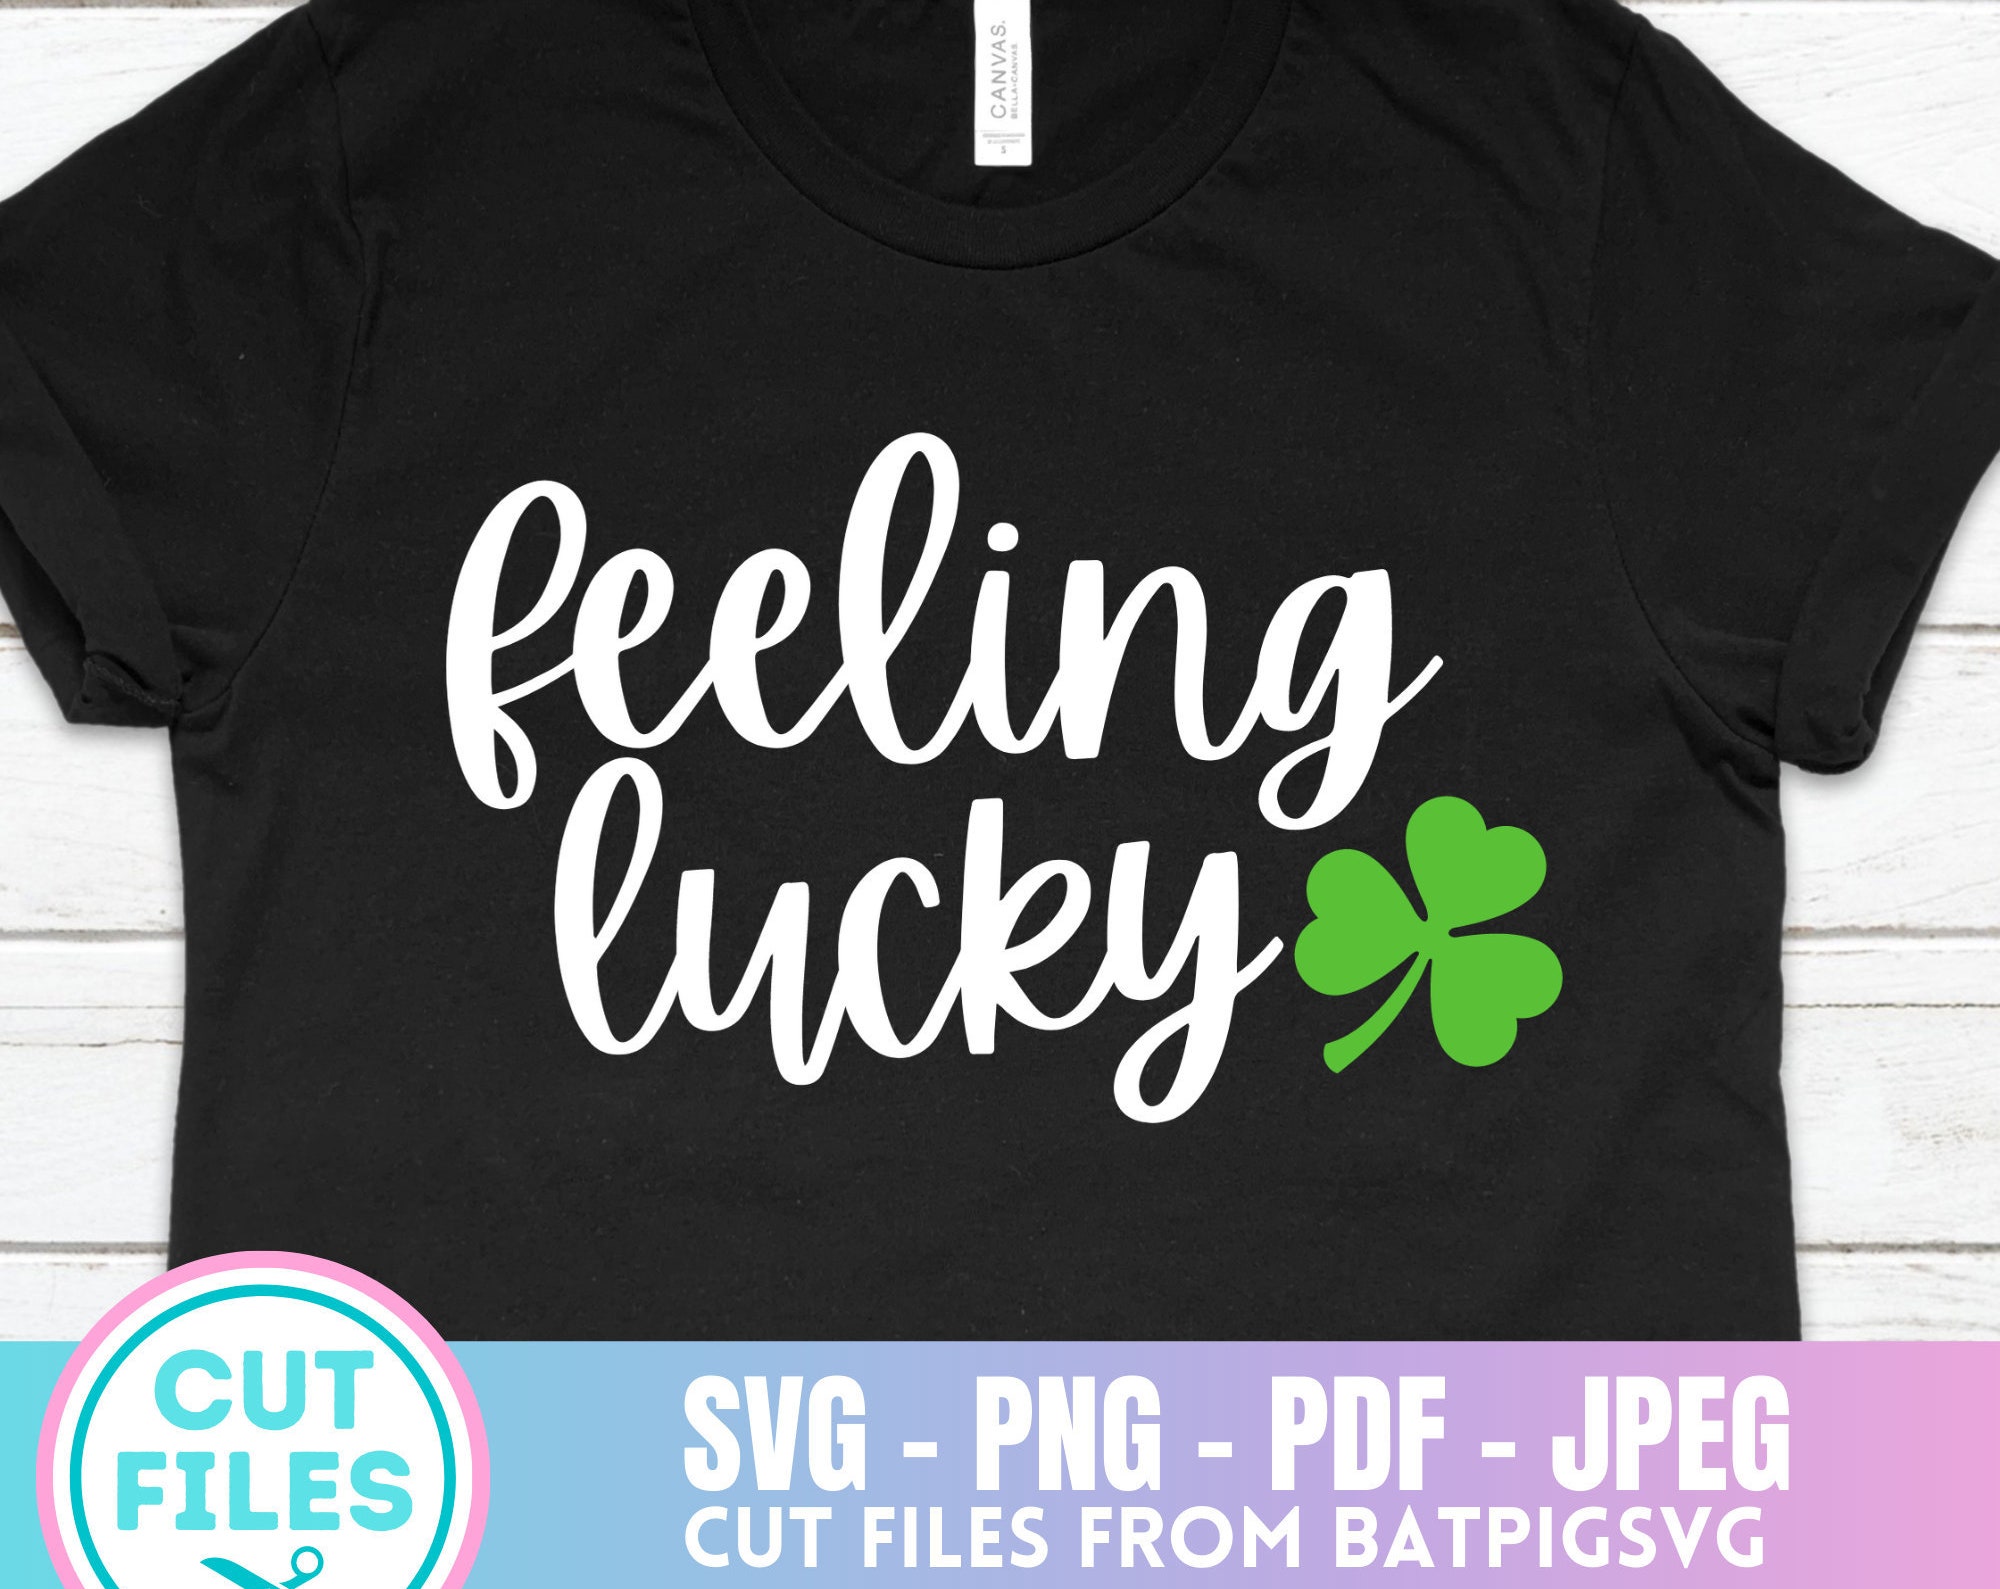 Discover Feeling Lucky T-Shirt